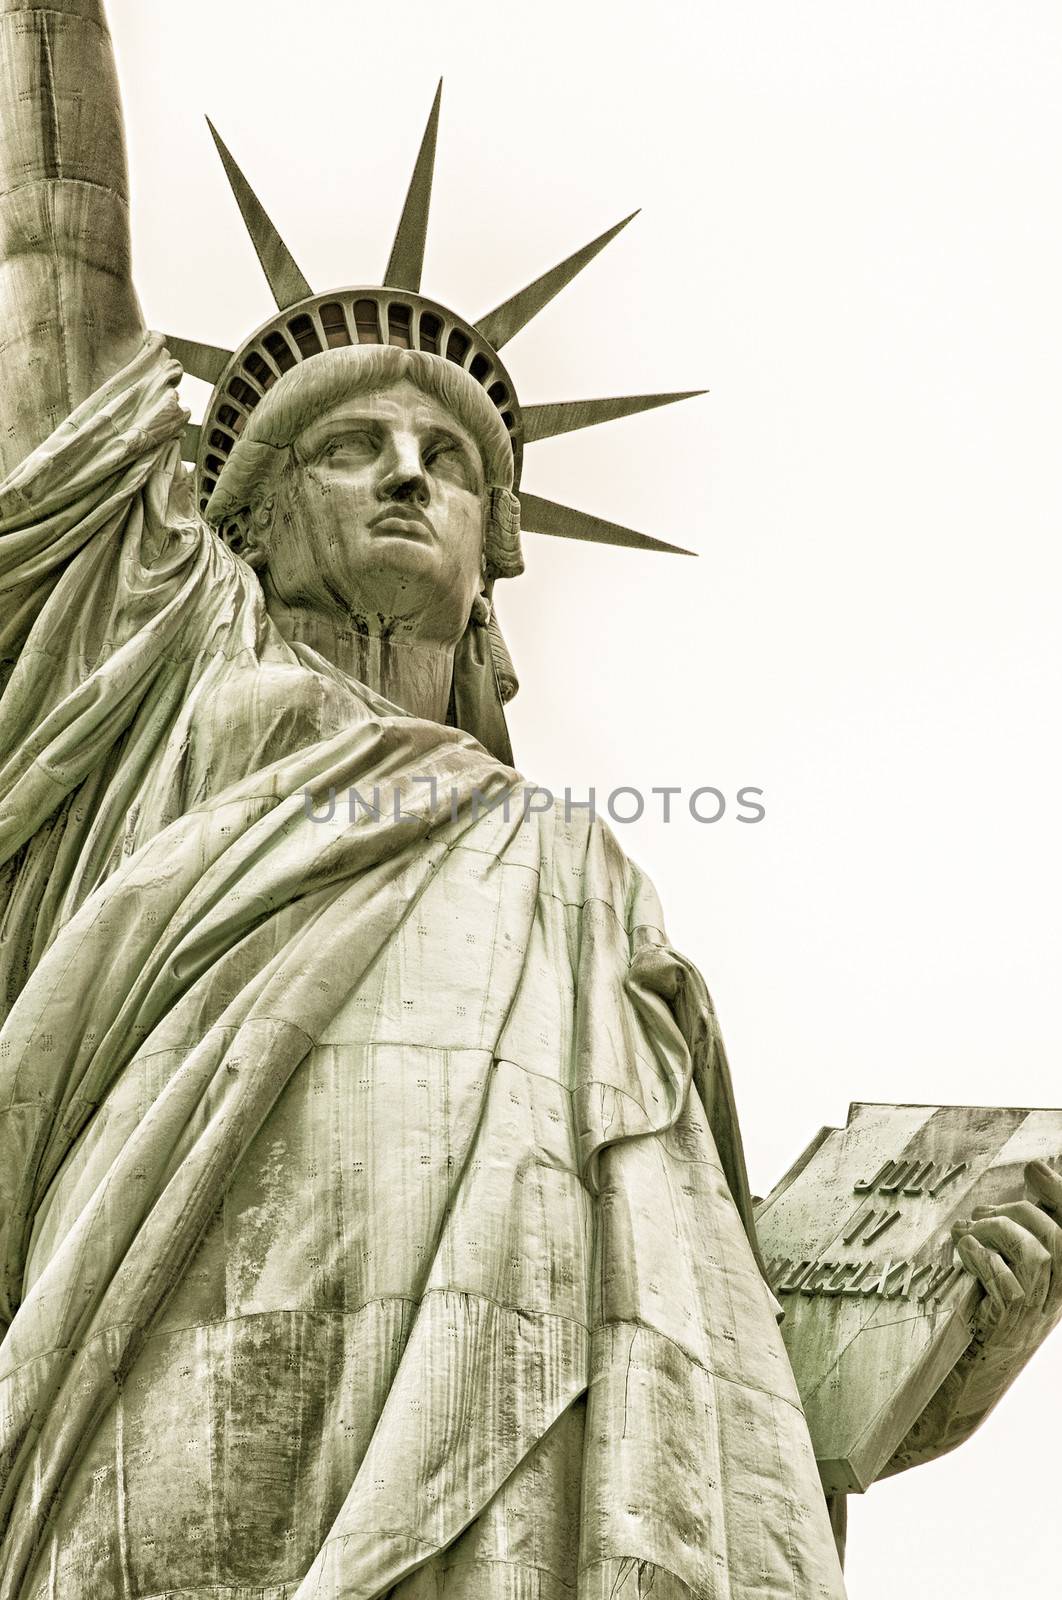 Statue Of Liberty by CelsoDiniz